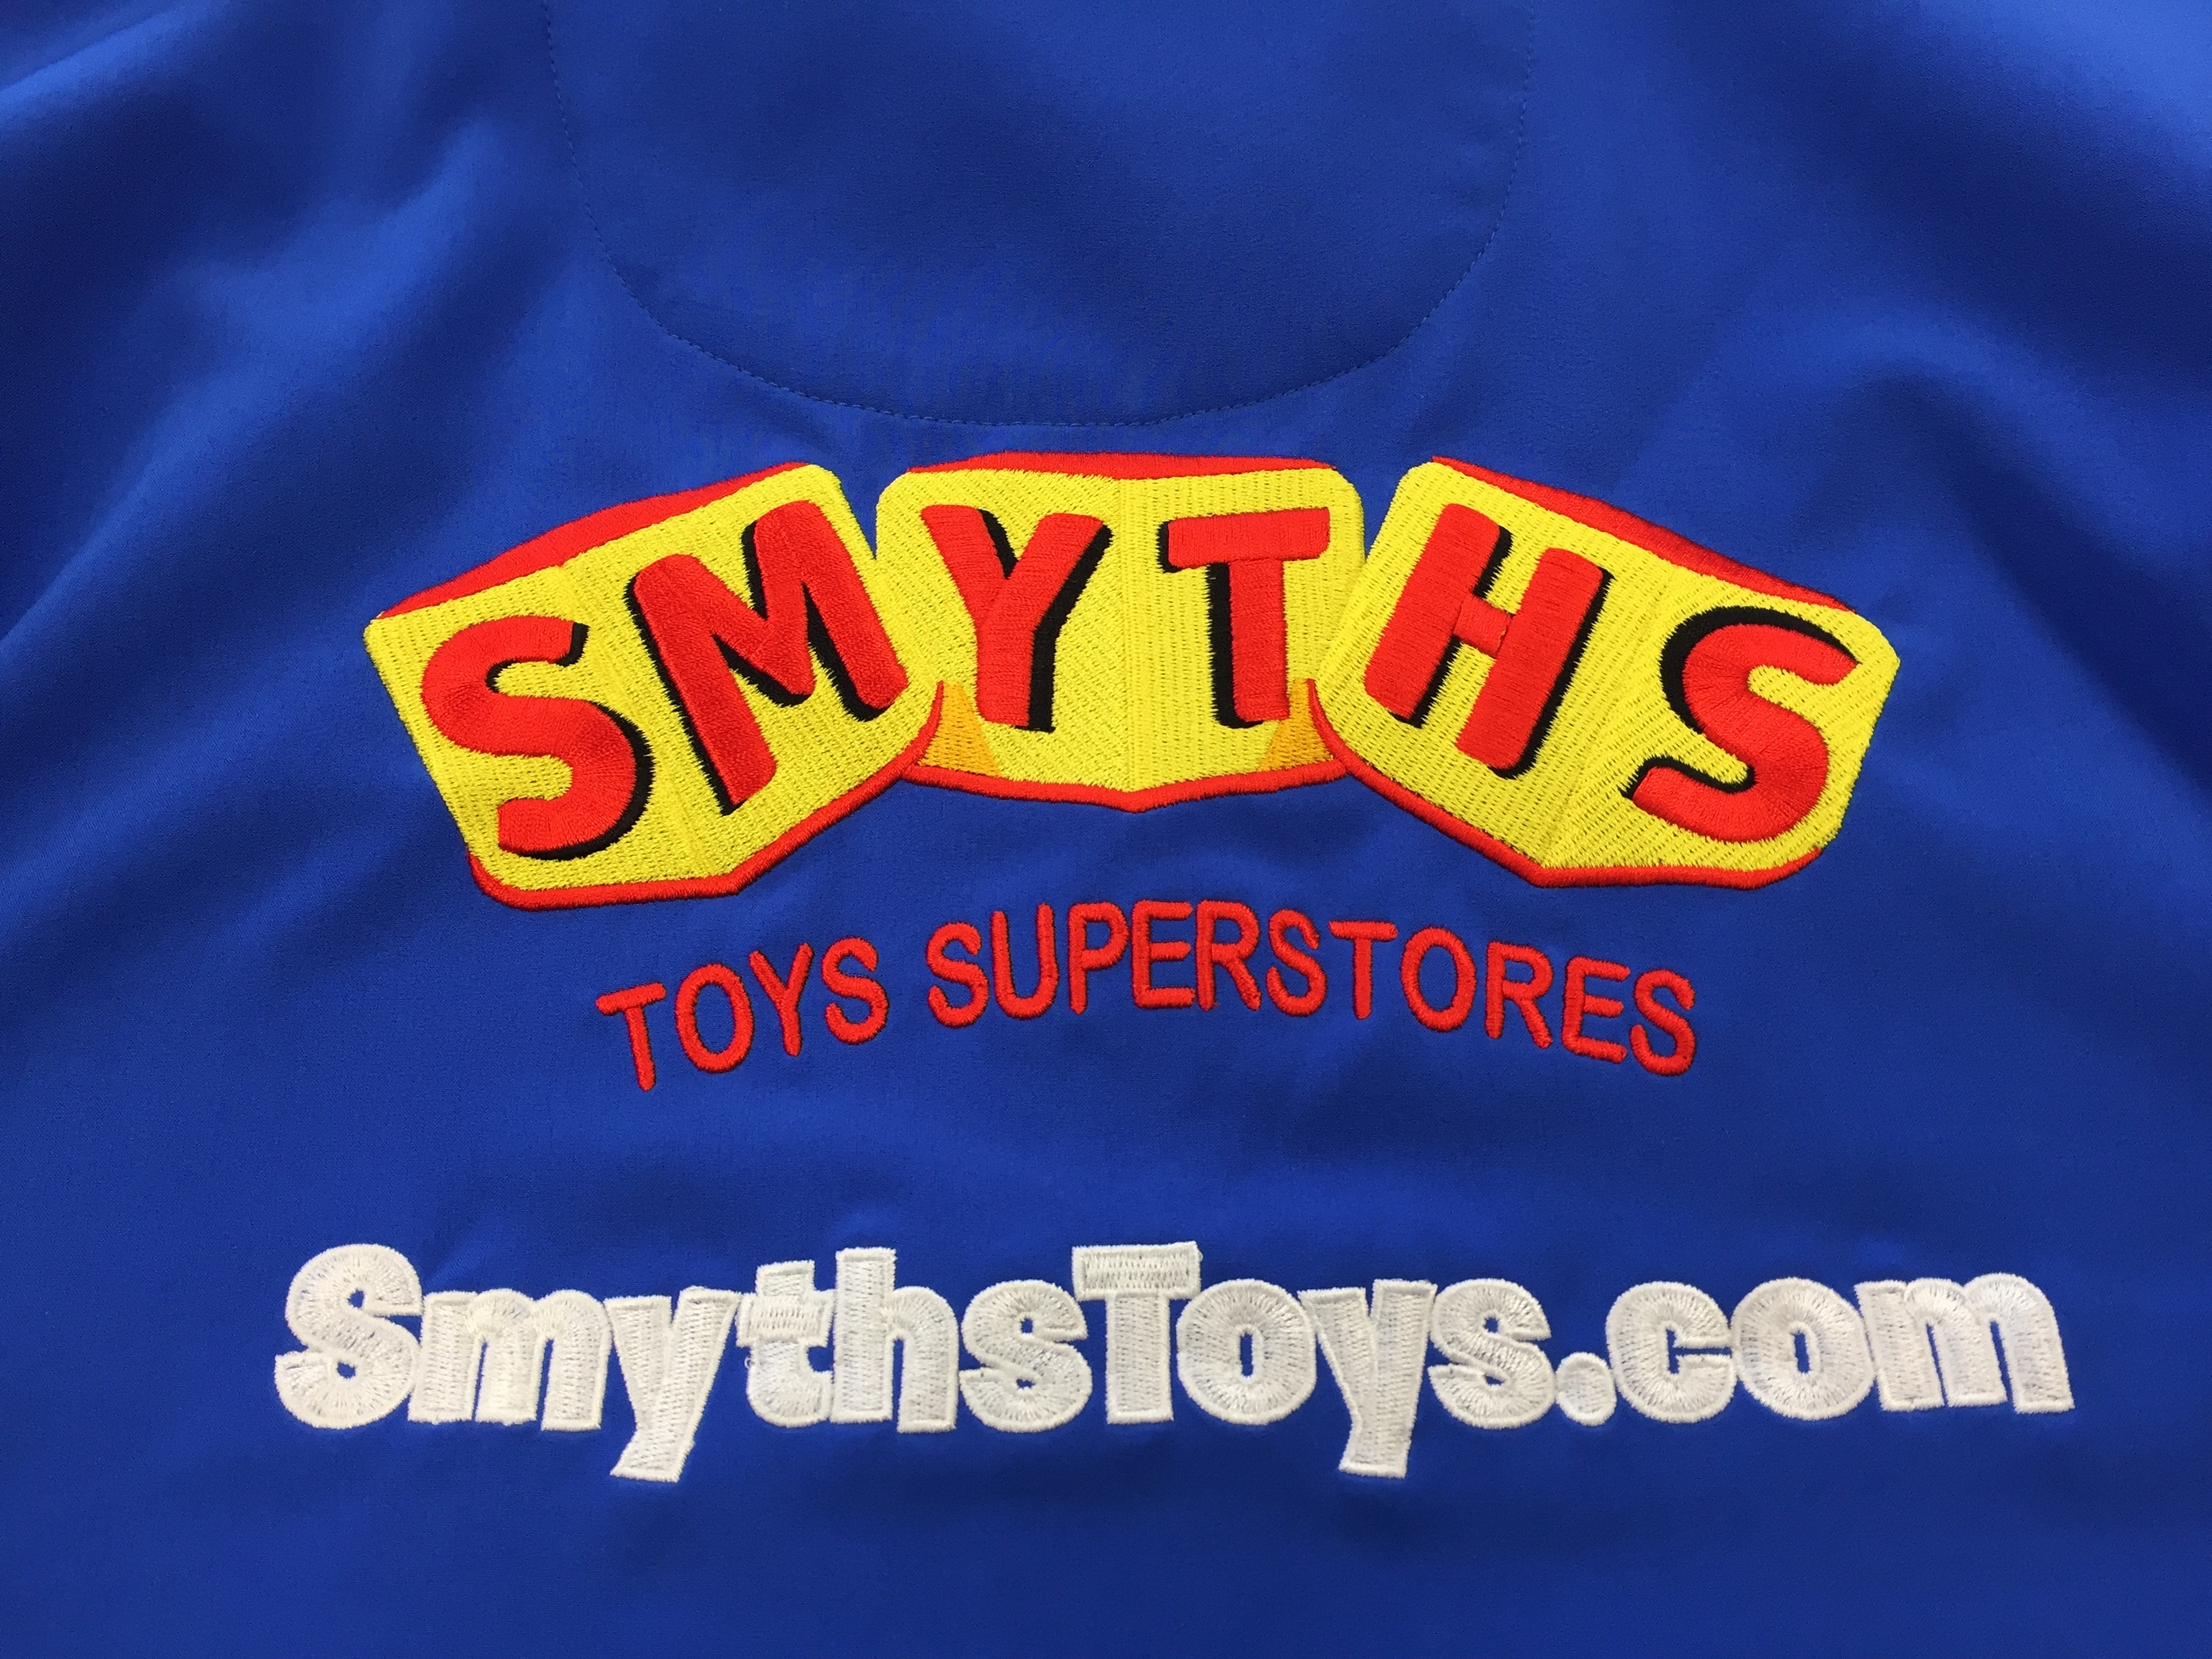 Smyths Toys Superstores - Taylor Made Designs